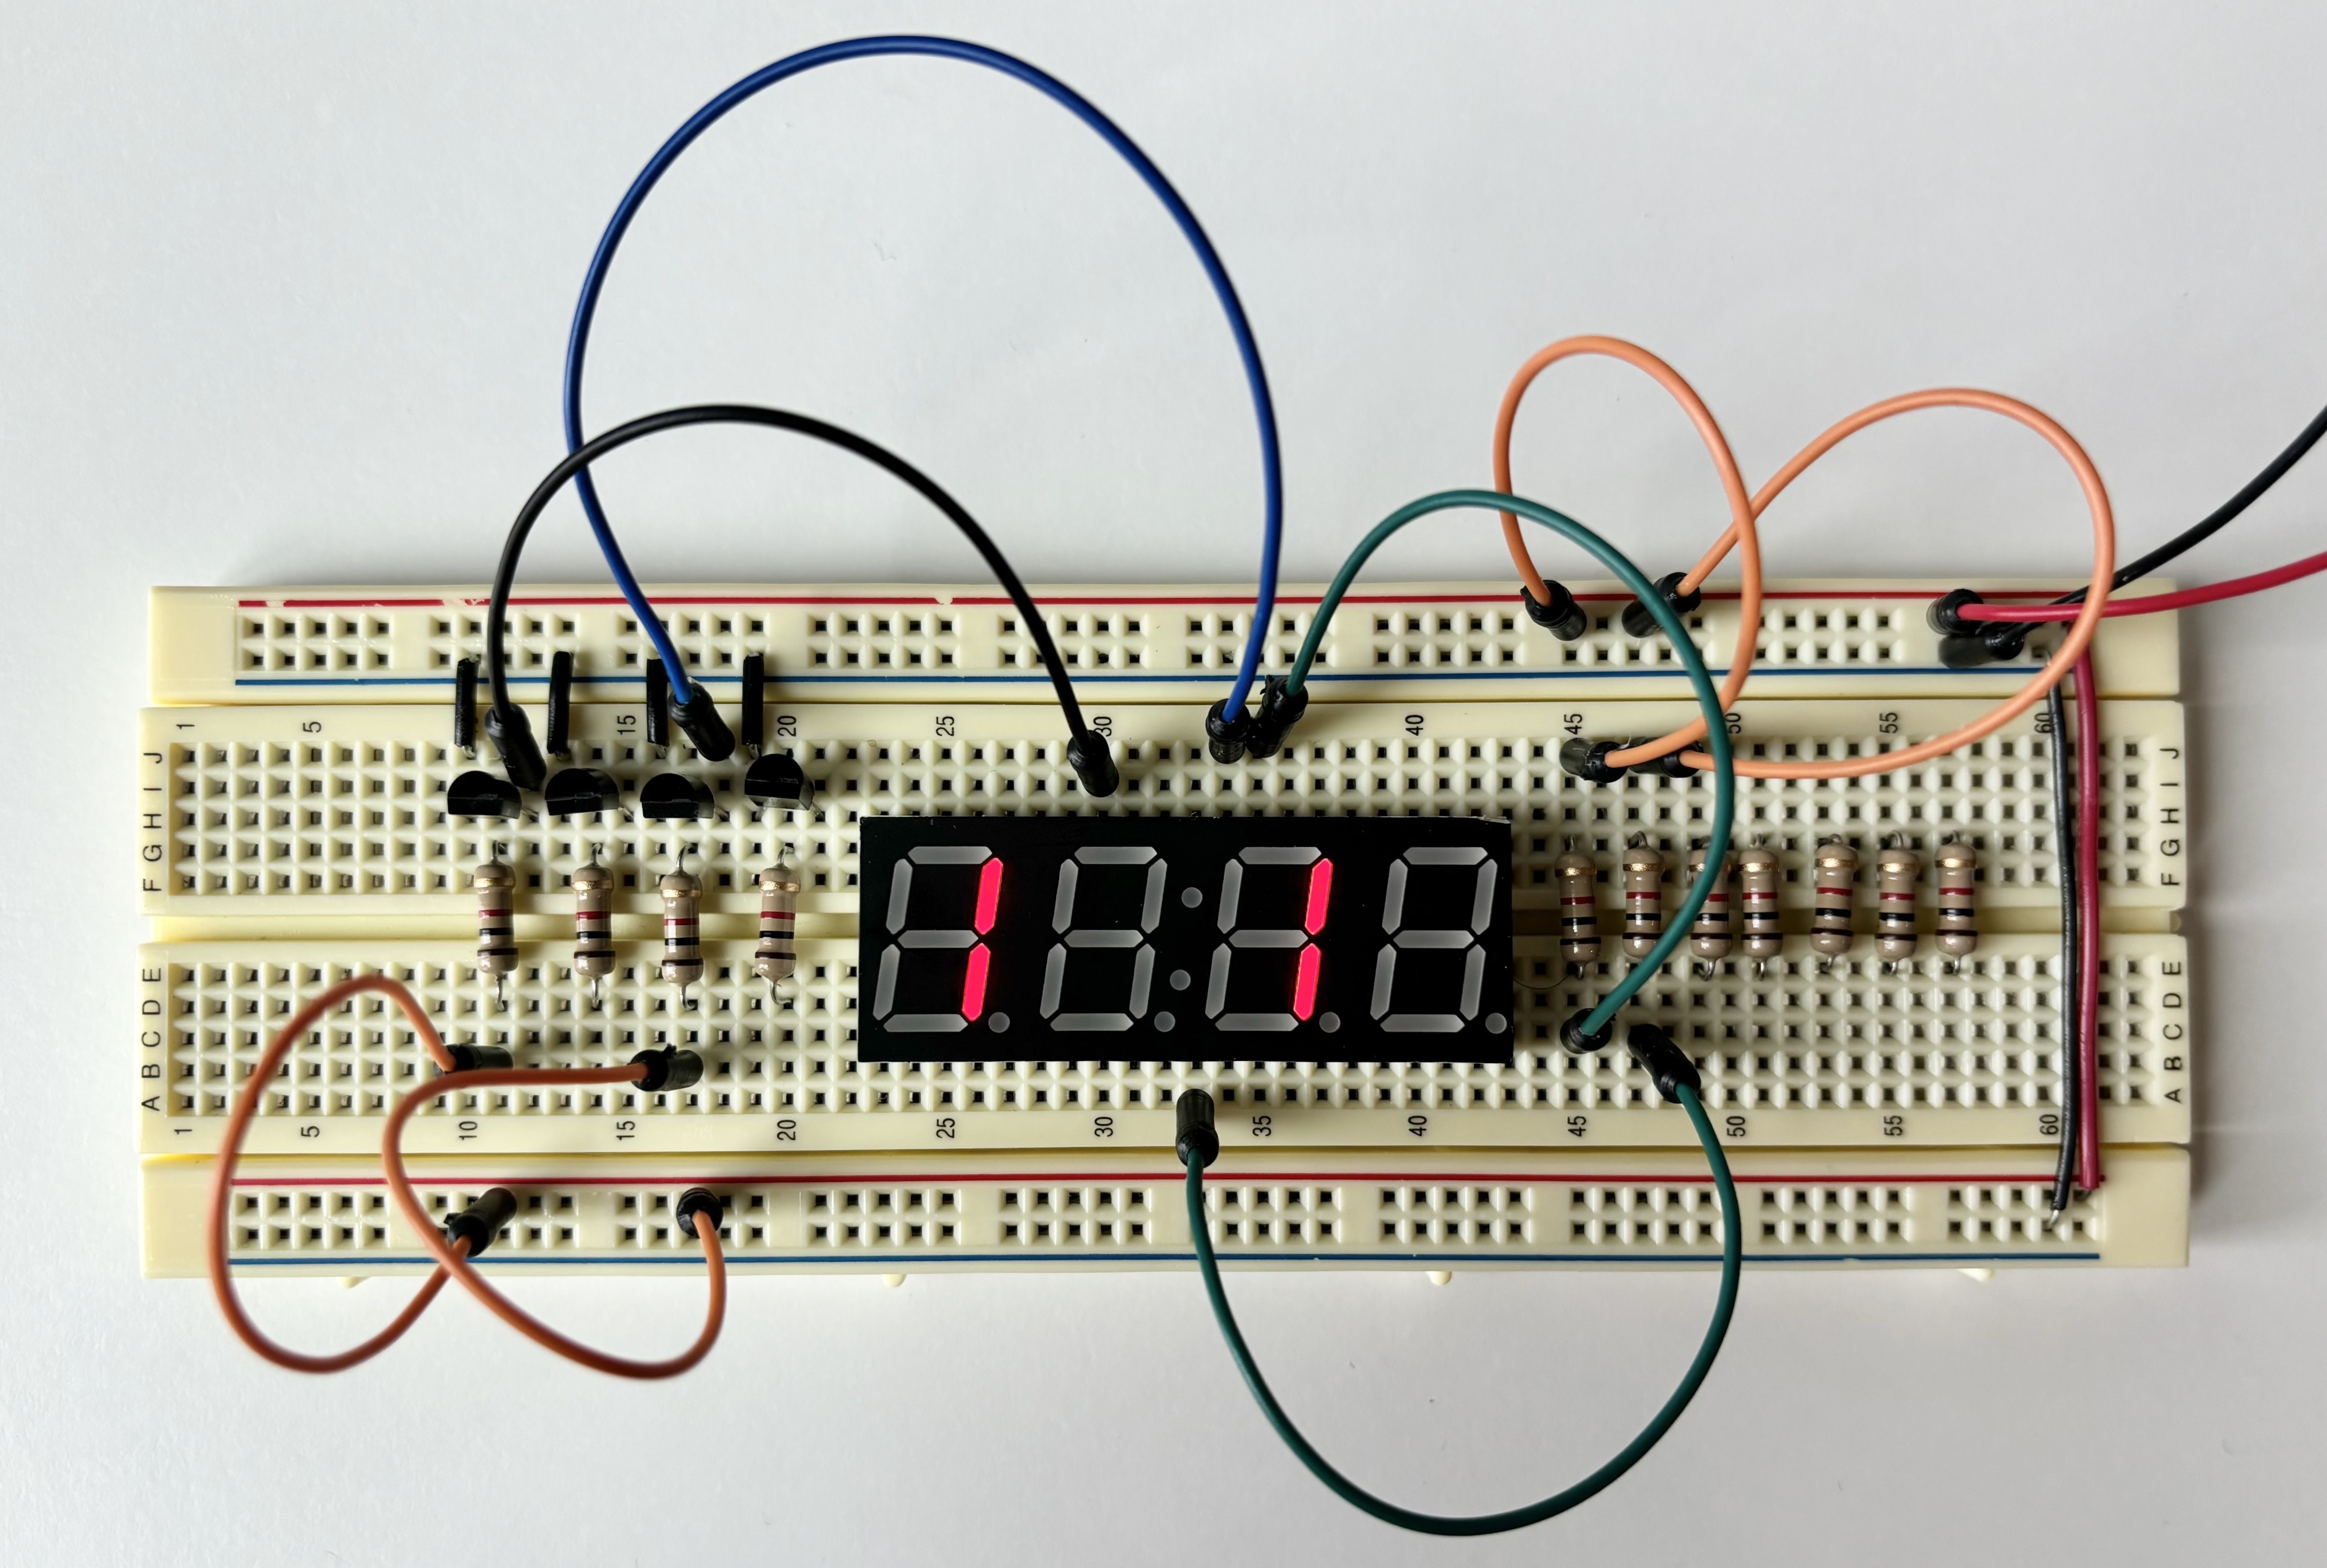 Test circuit for 1-1- using transistors